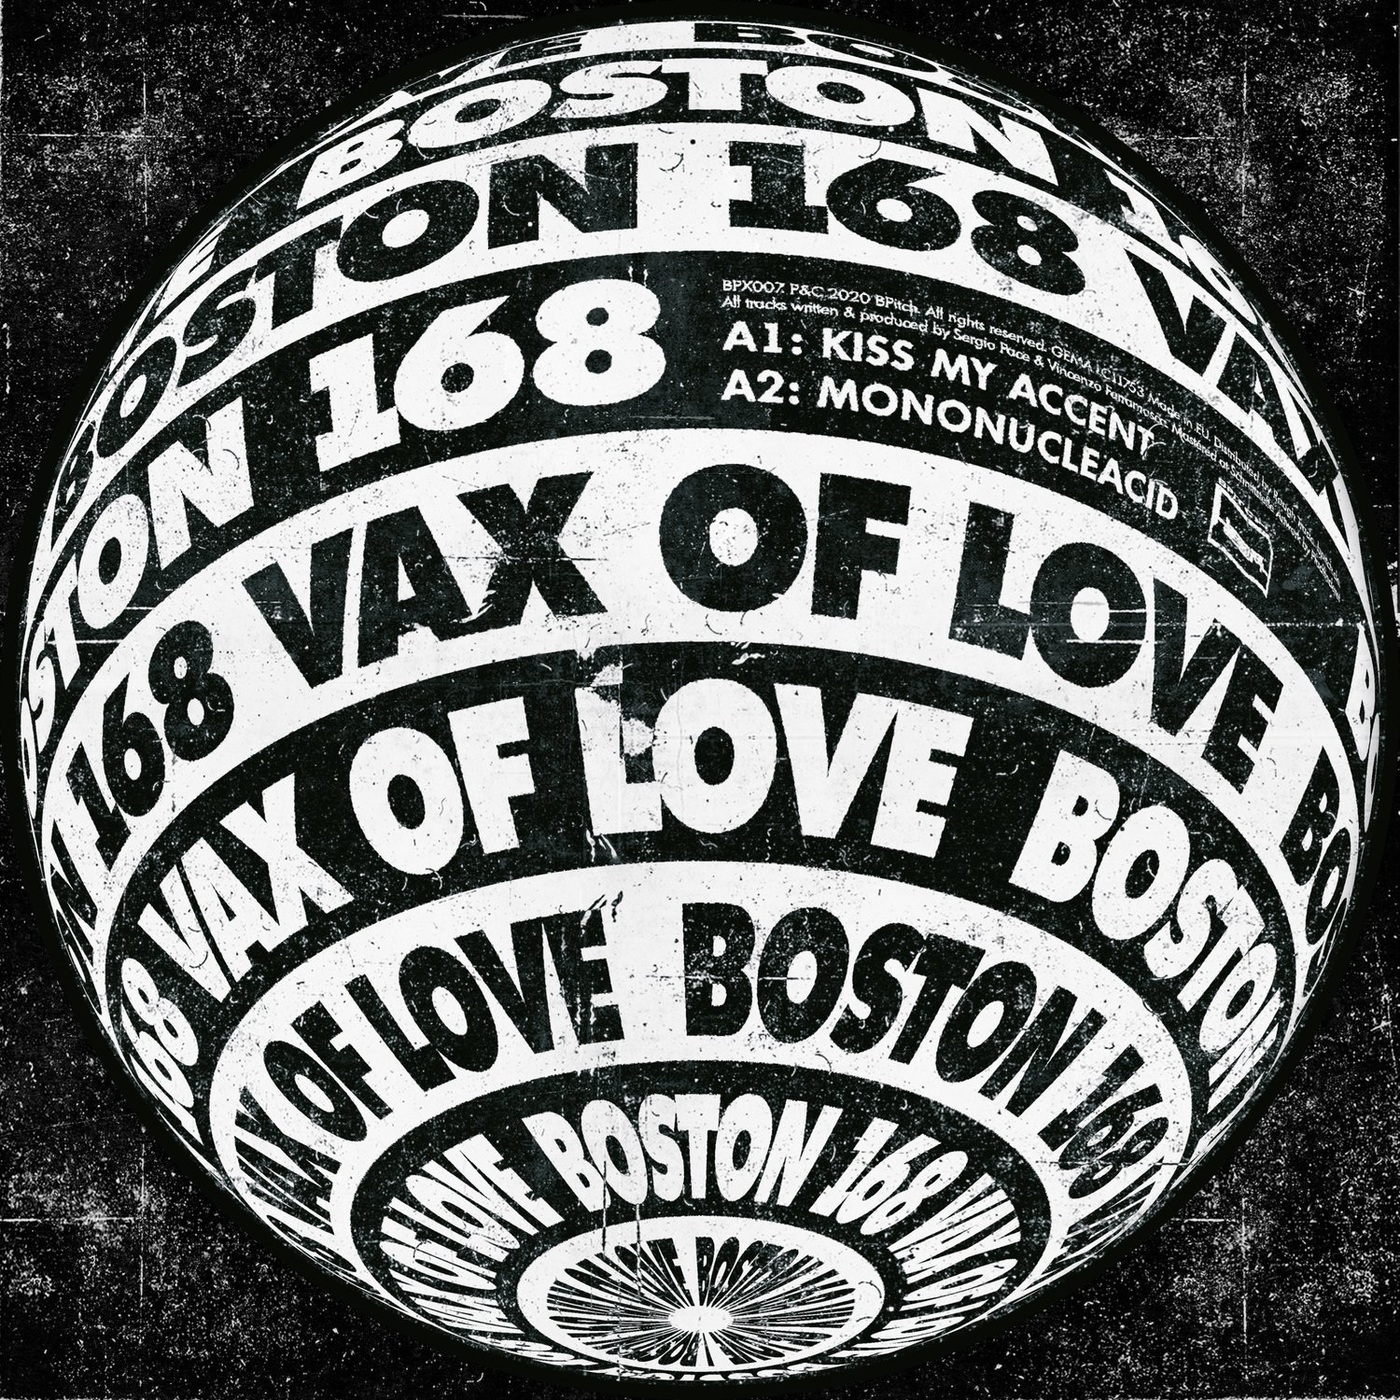 image cover: Boston 168 - Vax Of Love